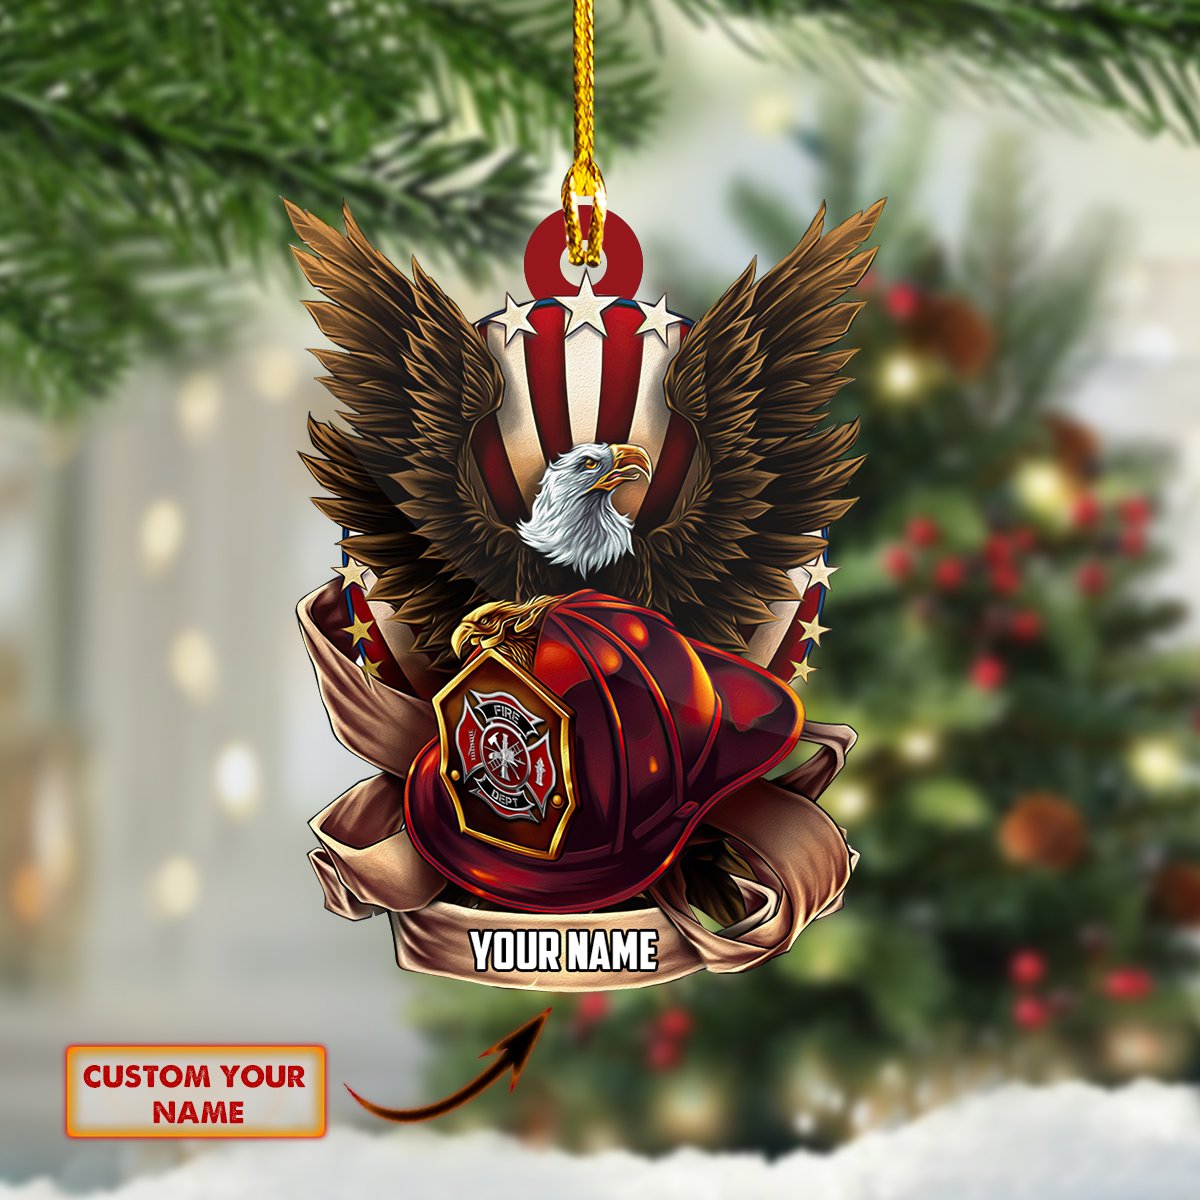 Firefighter Ornament - Red Eagle and Fireman Helmet Fireman Car Ornament